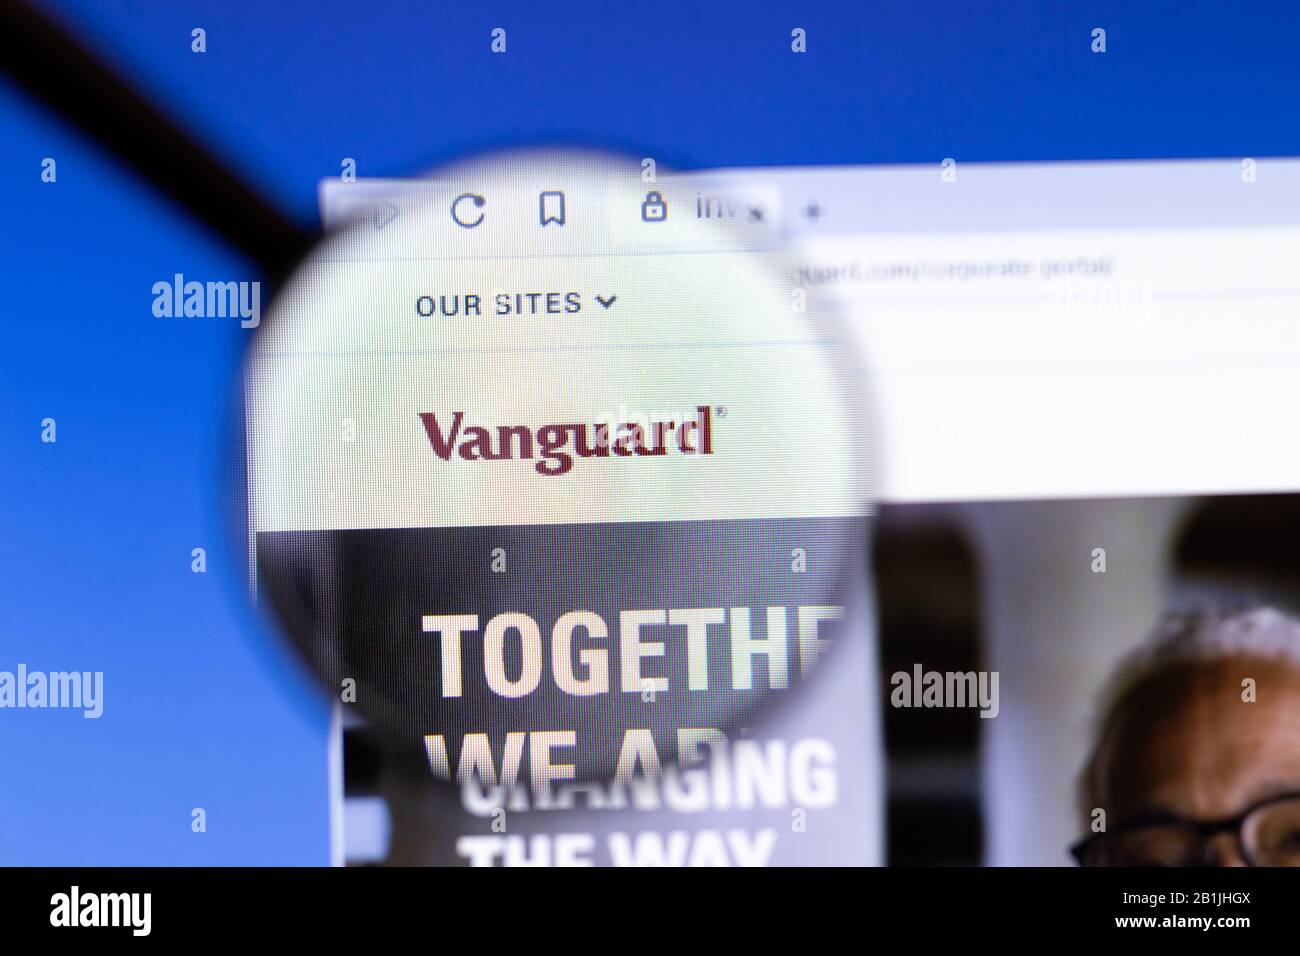 Los Angeles, California, USA - 25 February 2020: The Vanguard Group website homepage icon. Vanguard.com logo visible on display screen, Illustrative Stock Photo